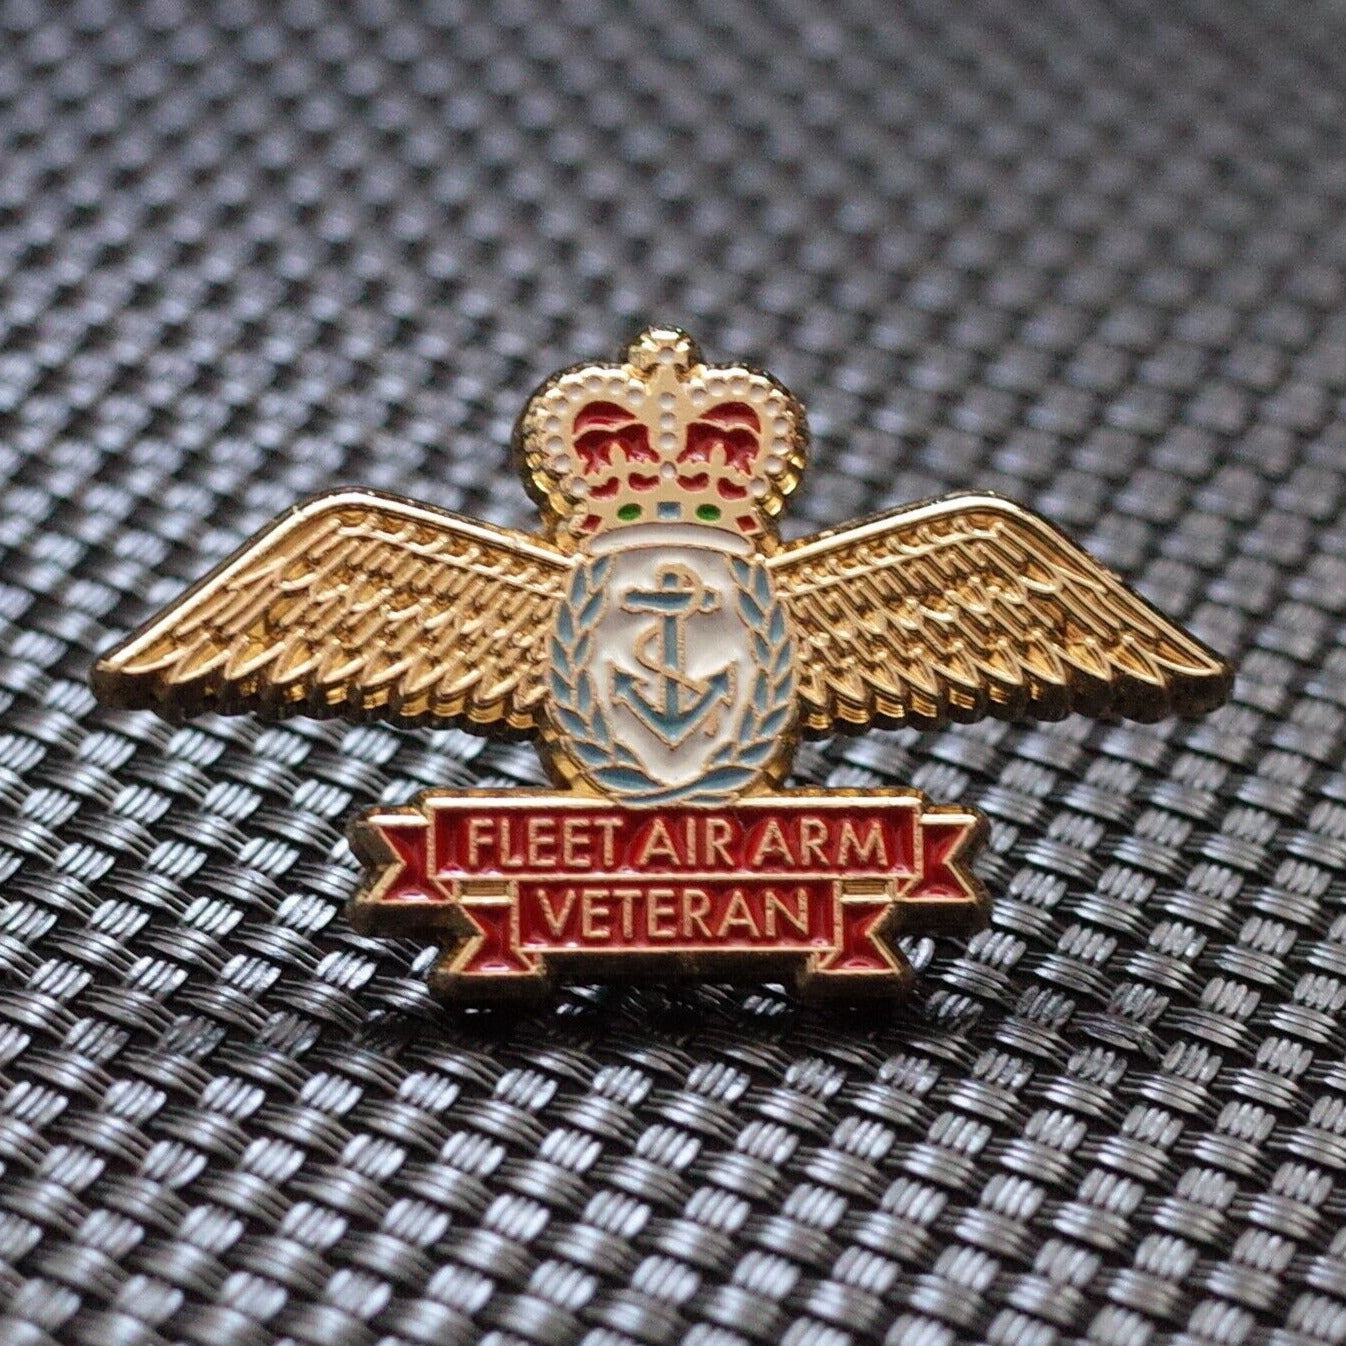 Fleet Air Arm Veteran Pin Badge